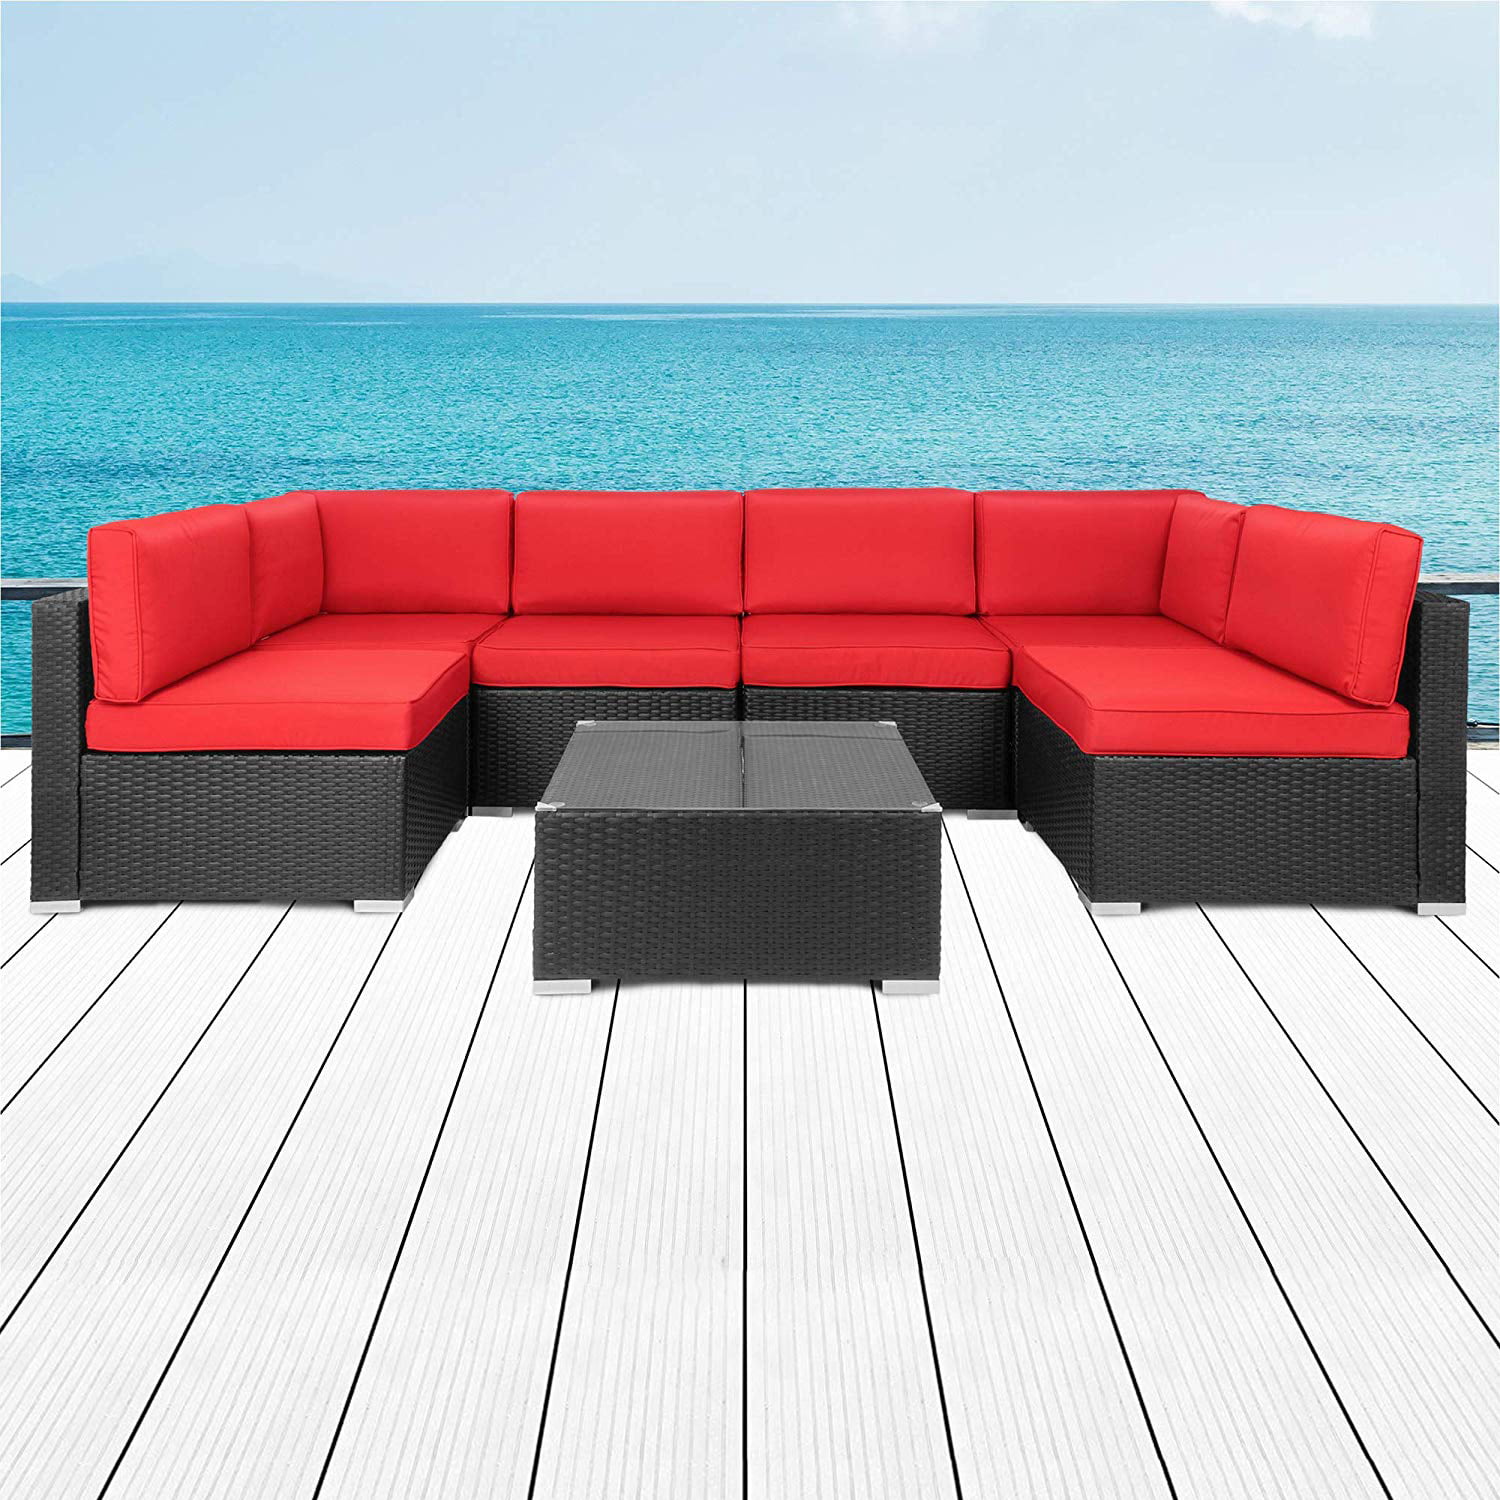 Kinbor 7pcs Outdoor Patio Furniture Sectional Pe Wicker Rattan Sofa Set